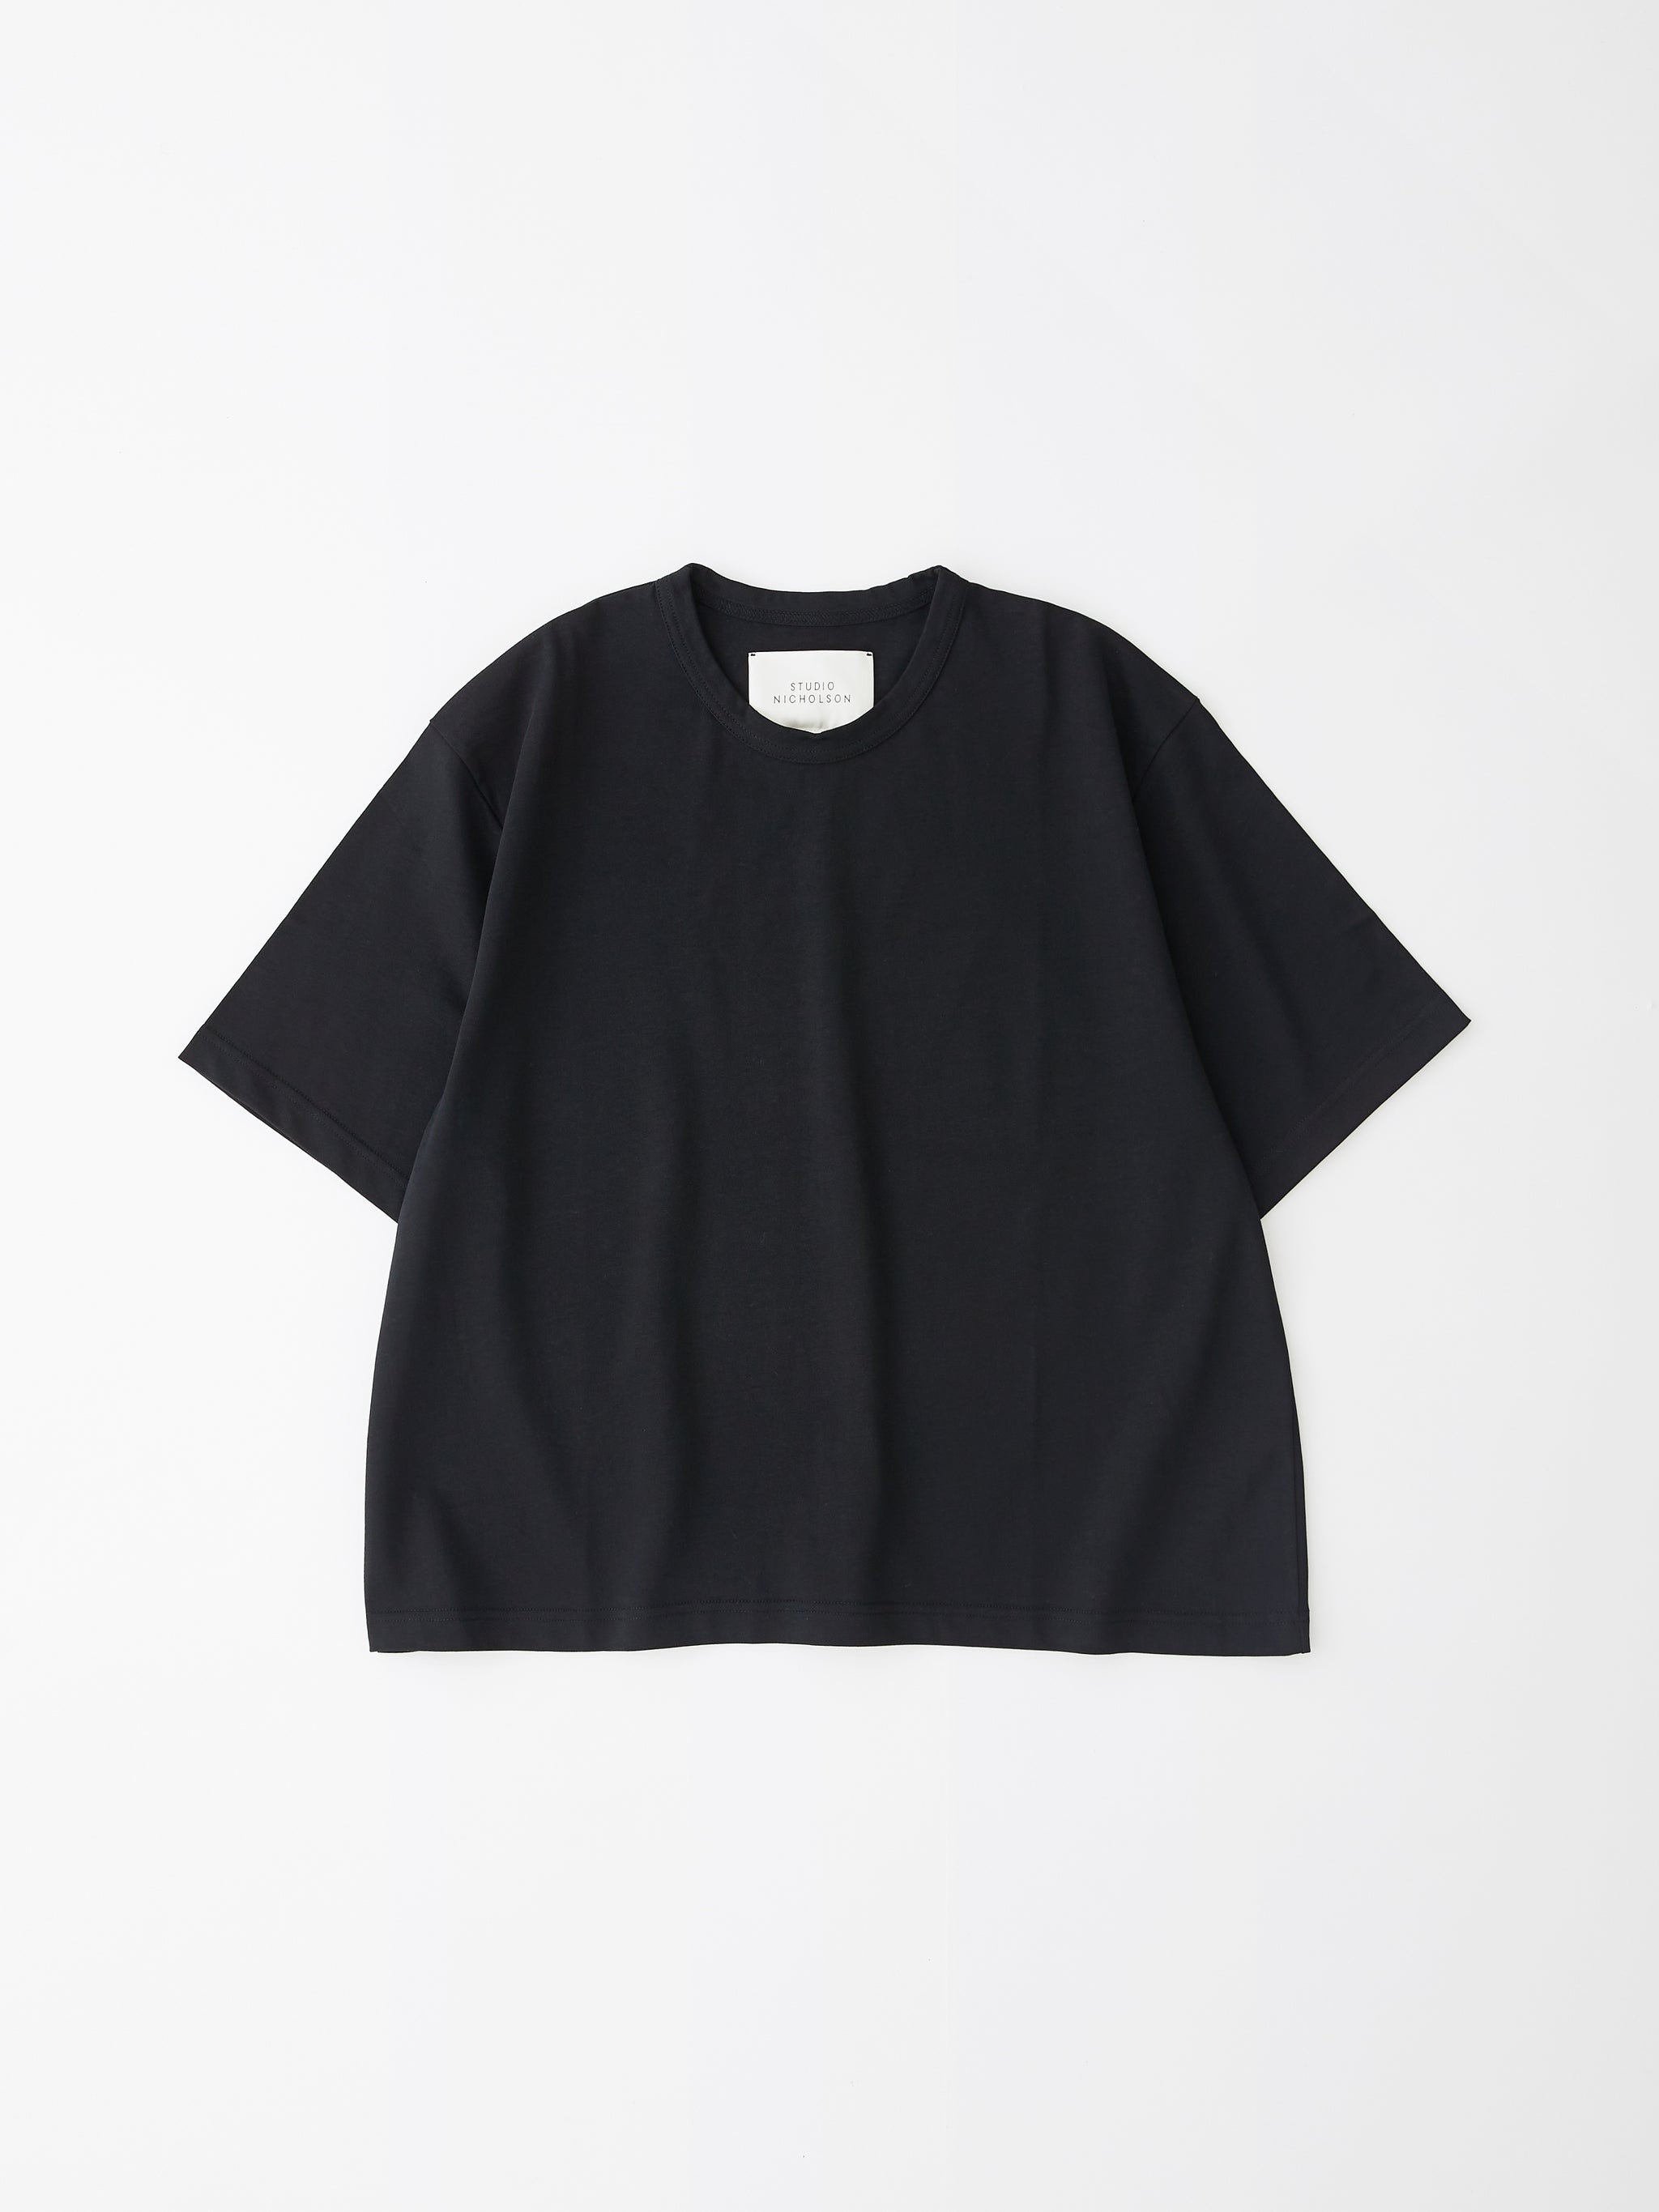 Lee T-Shirt In Black– Studio Nicholson